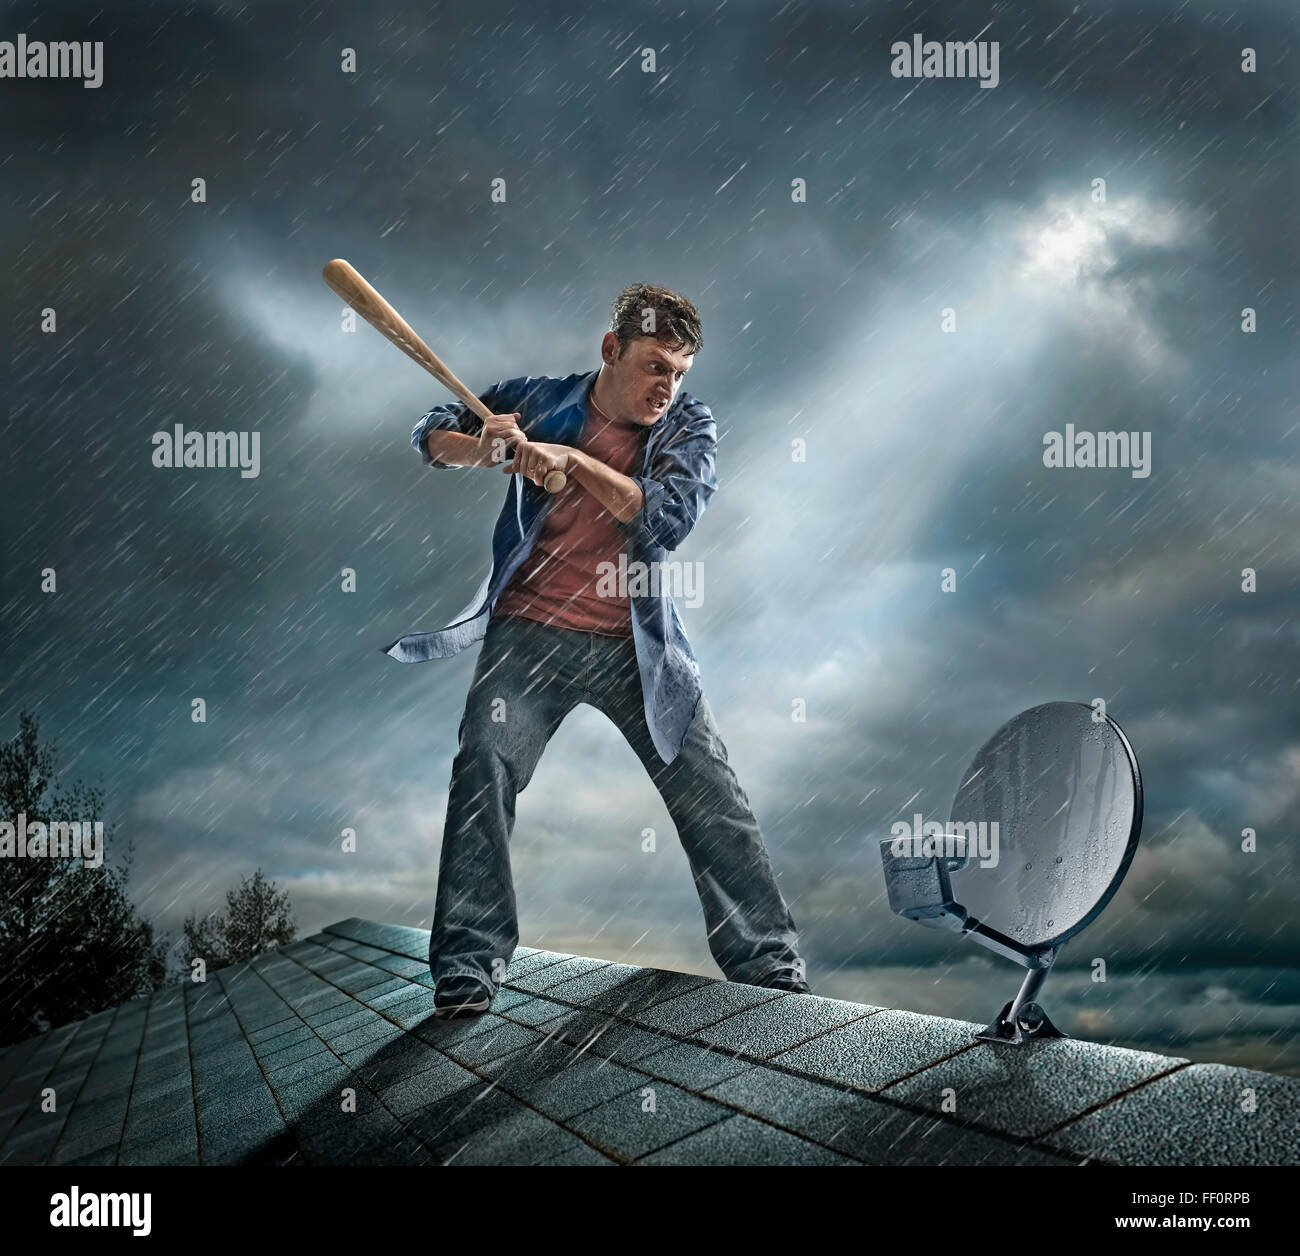 Caucasian man swinging baseball bat at satellite dish on roof Stock Photo